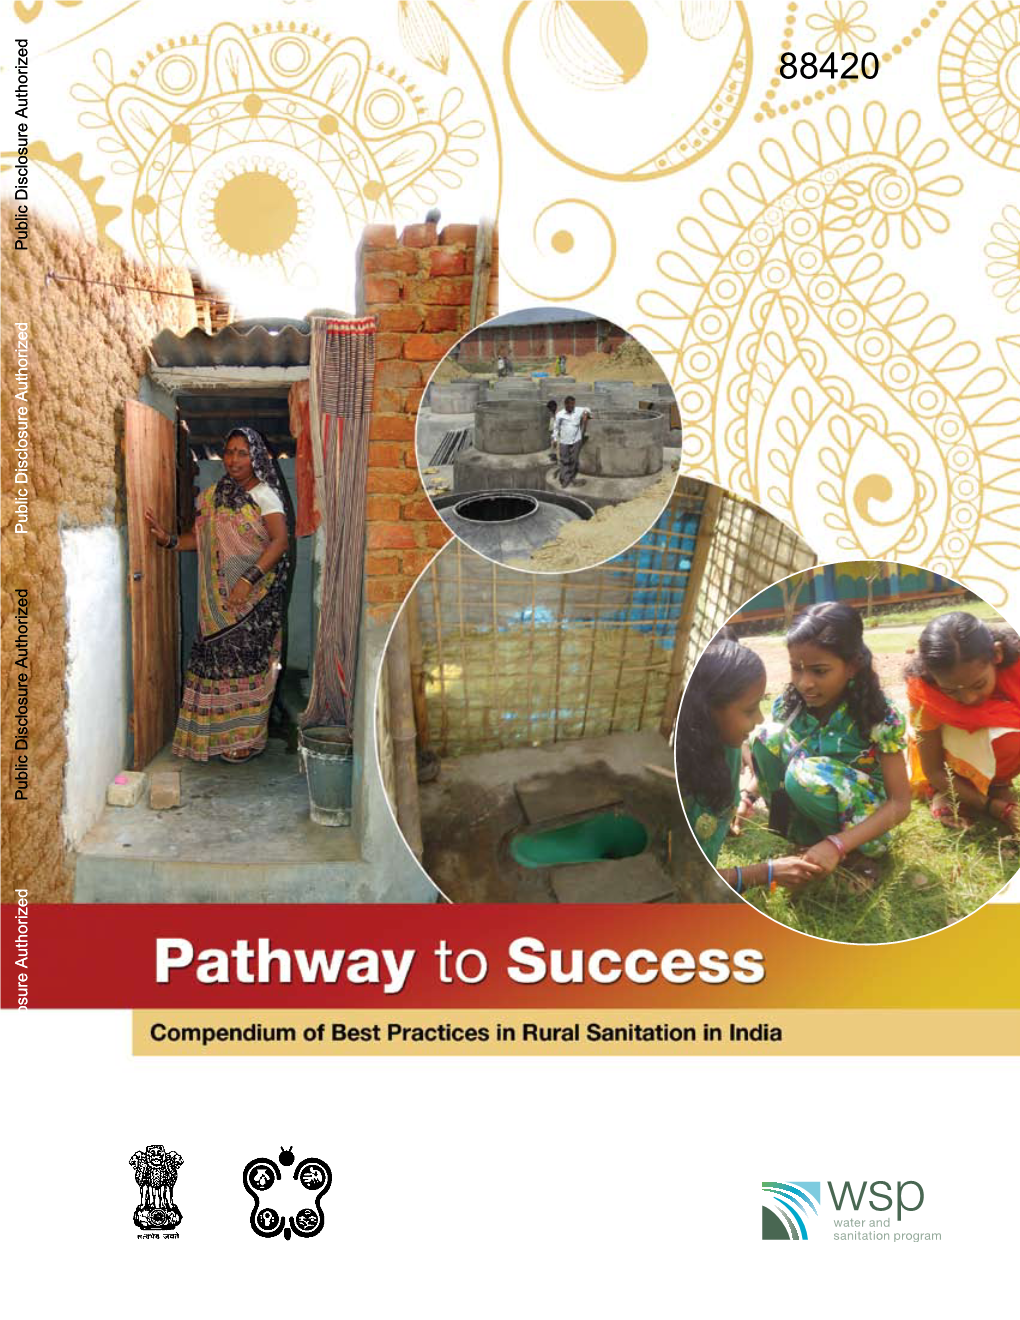 Pathway to Success: Compendium of Best Practices in Rural Sanitation In